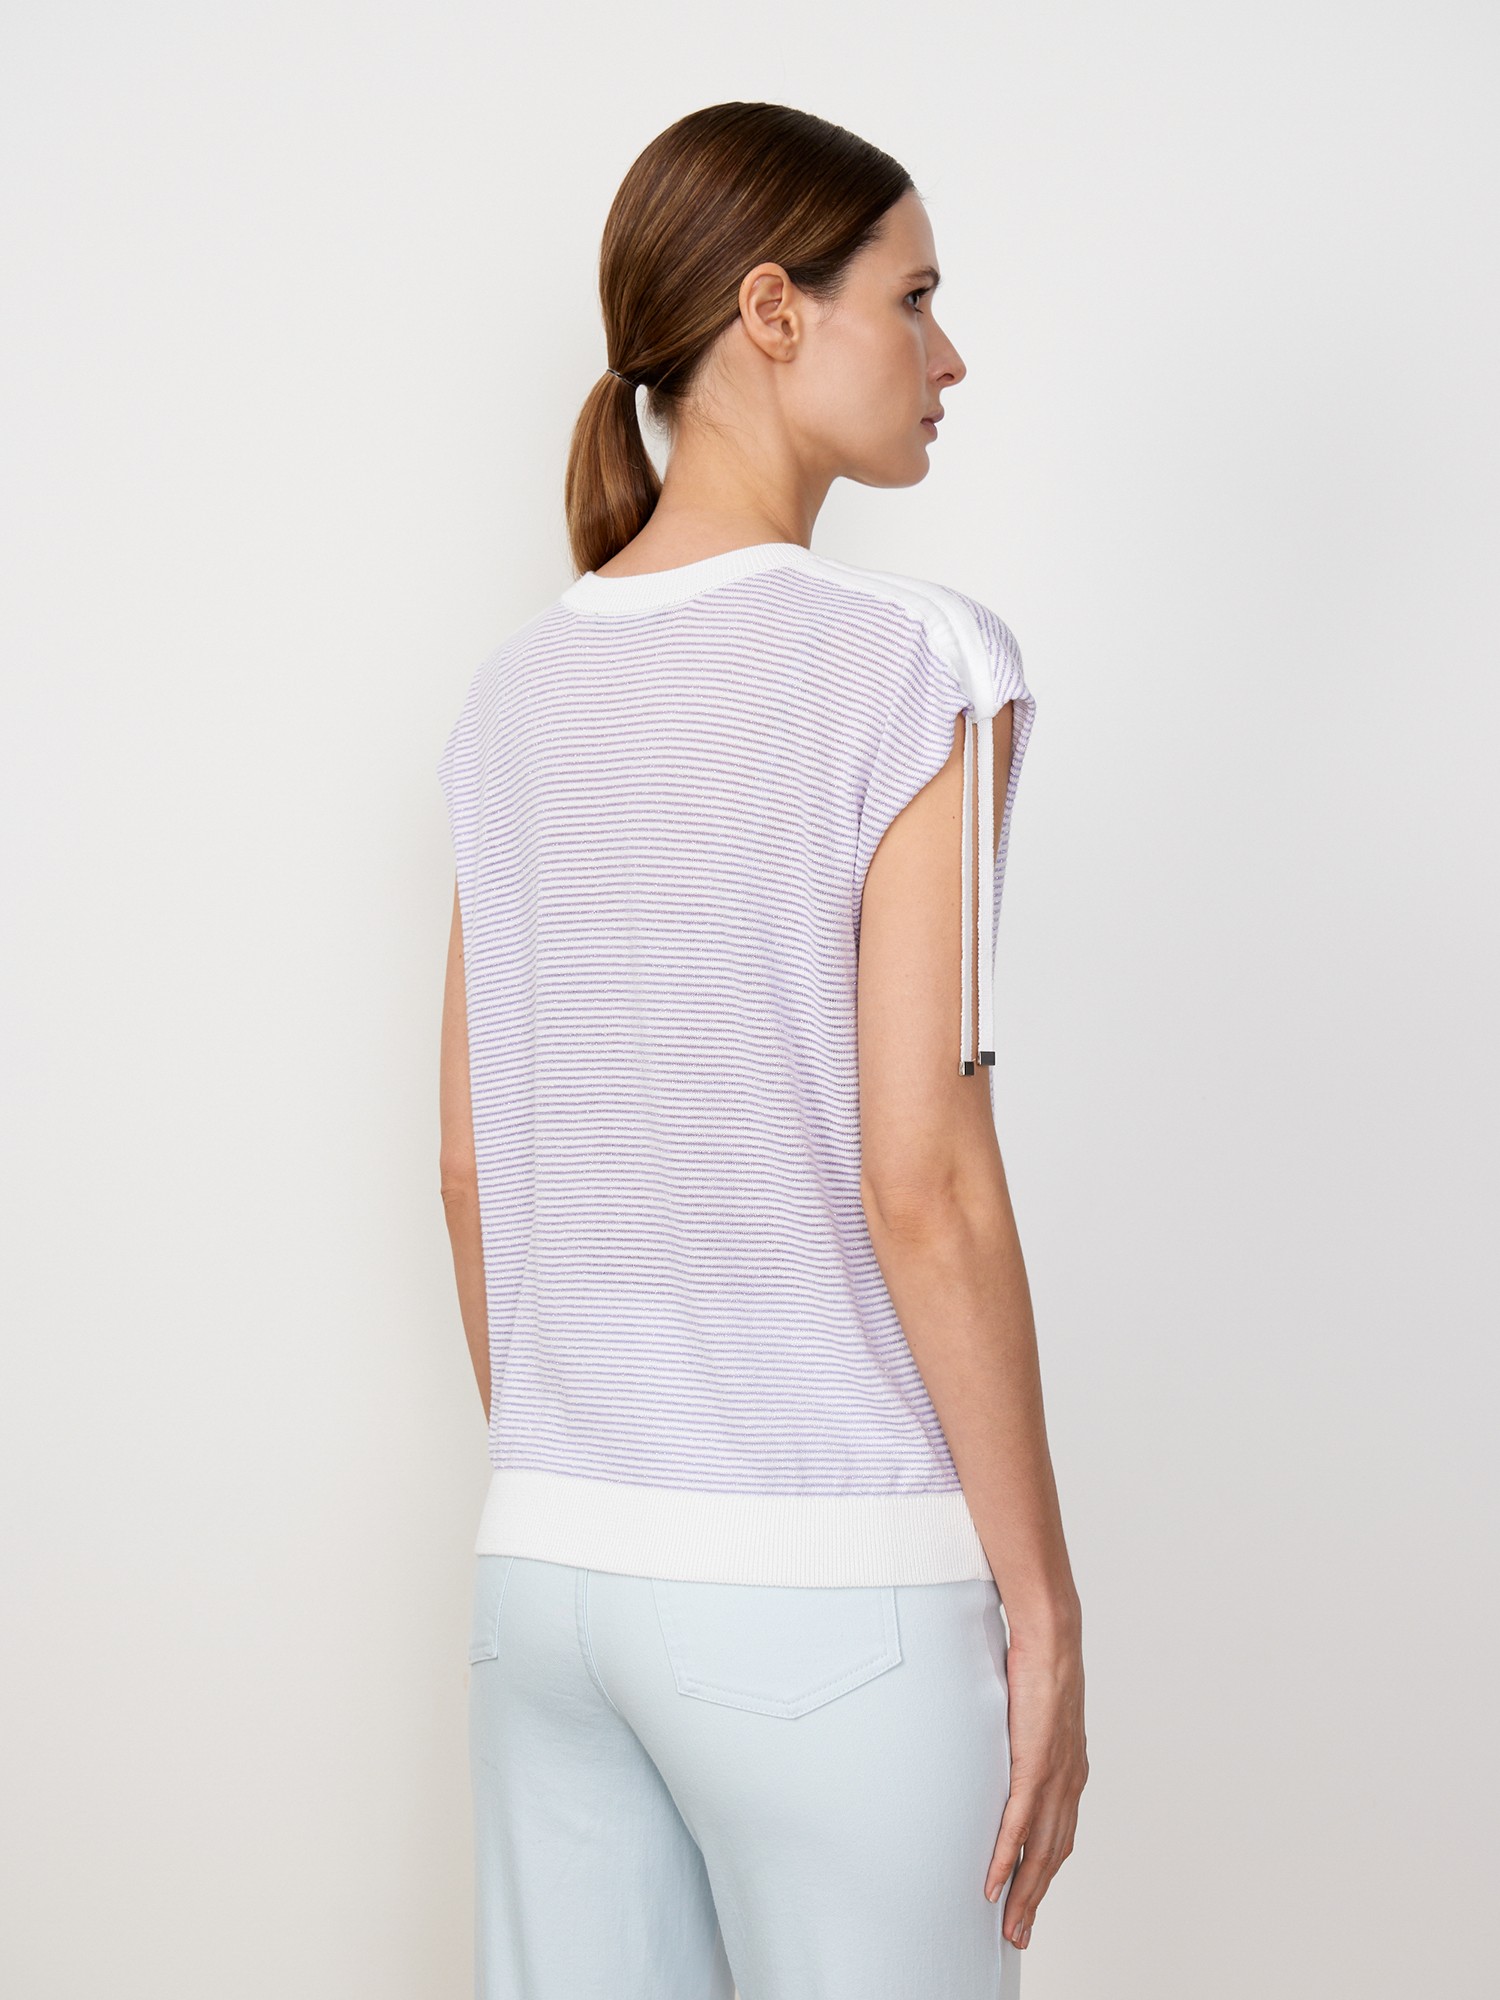 Вязаная блуза с люрексом Elis BL1054V, цвет фиолетовый, размер 50 - фото 4